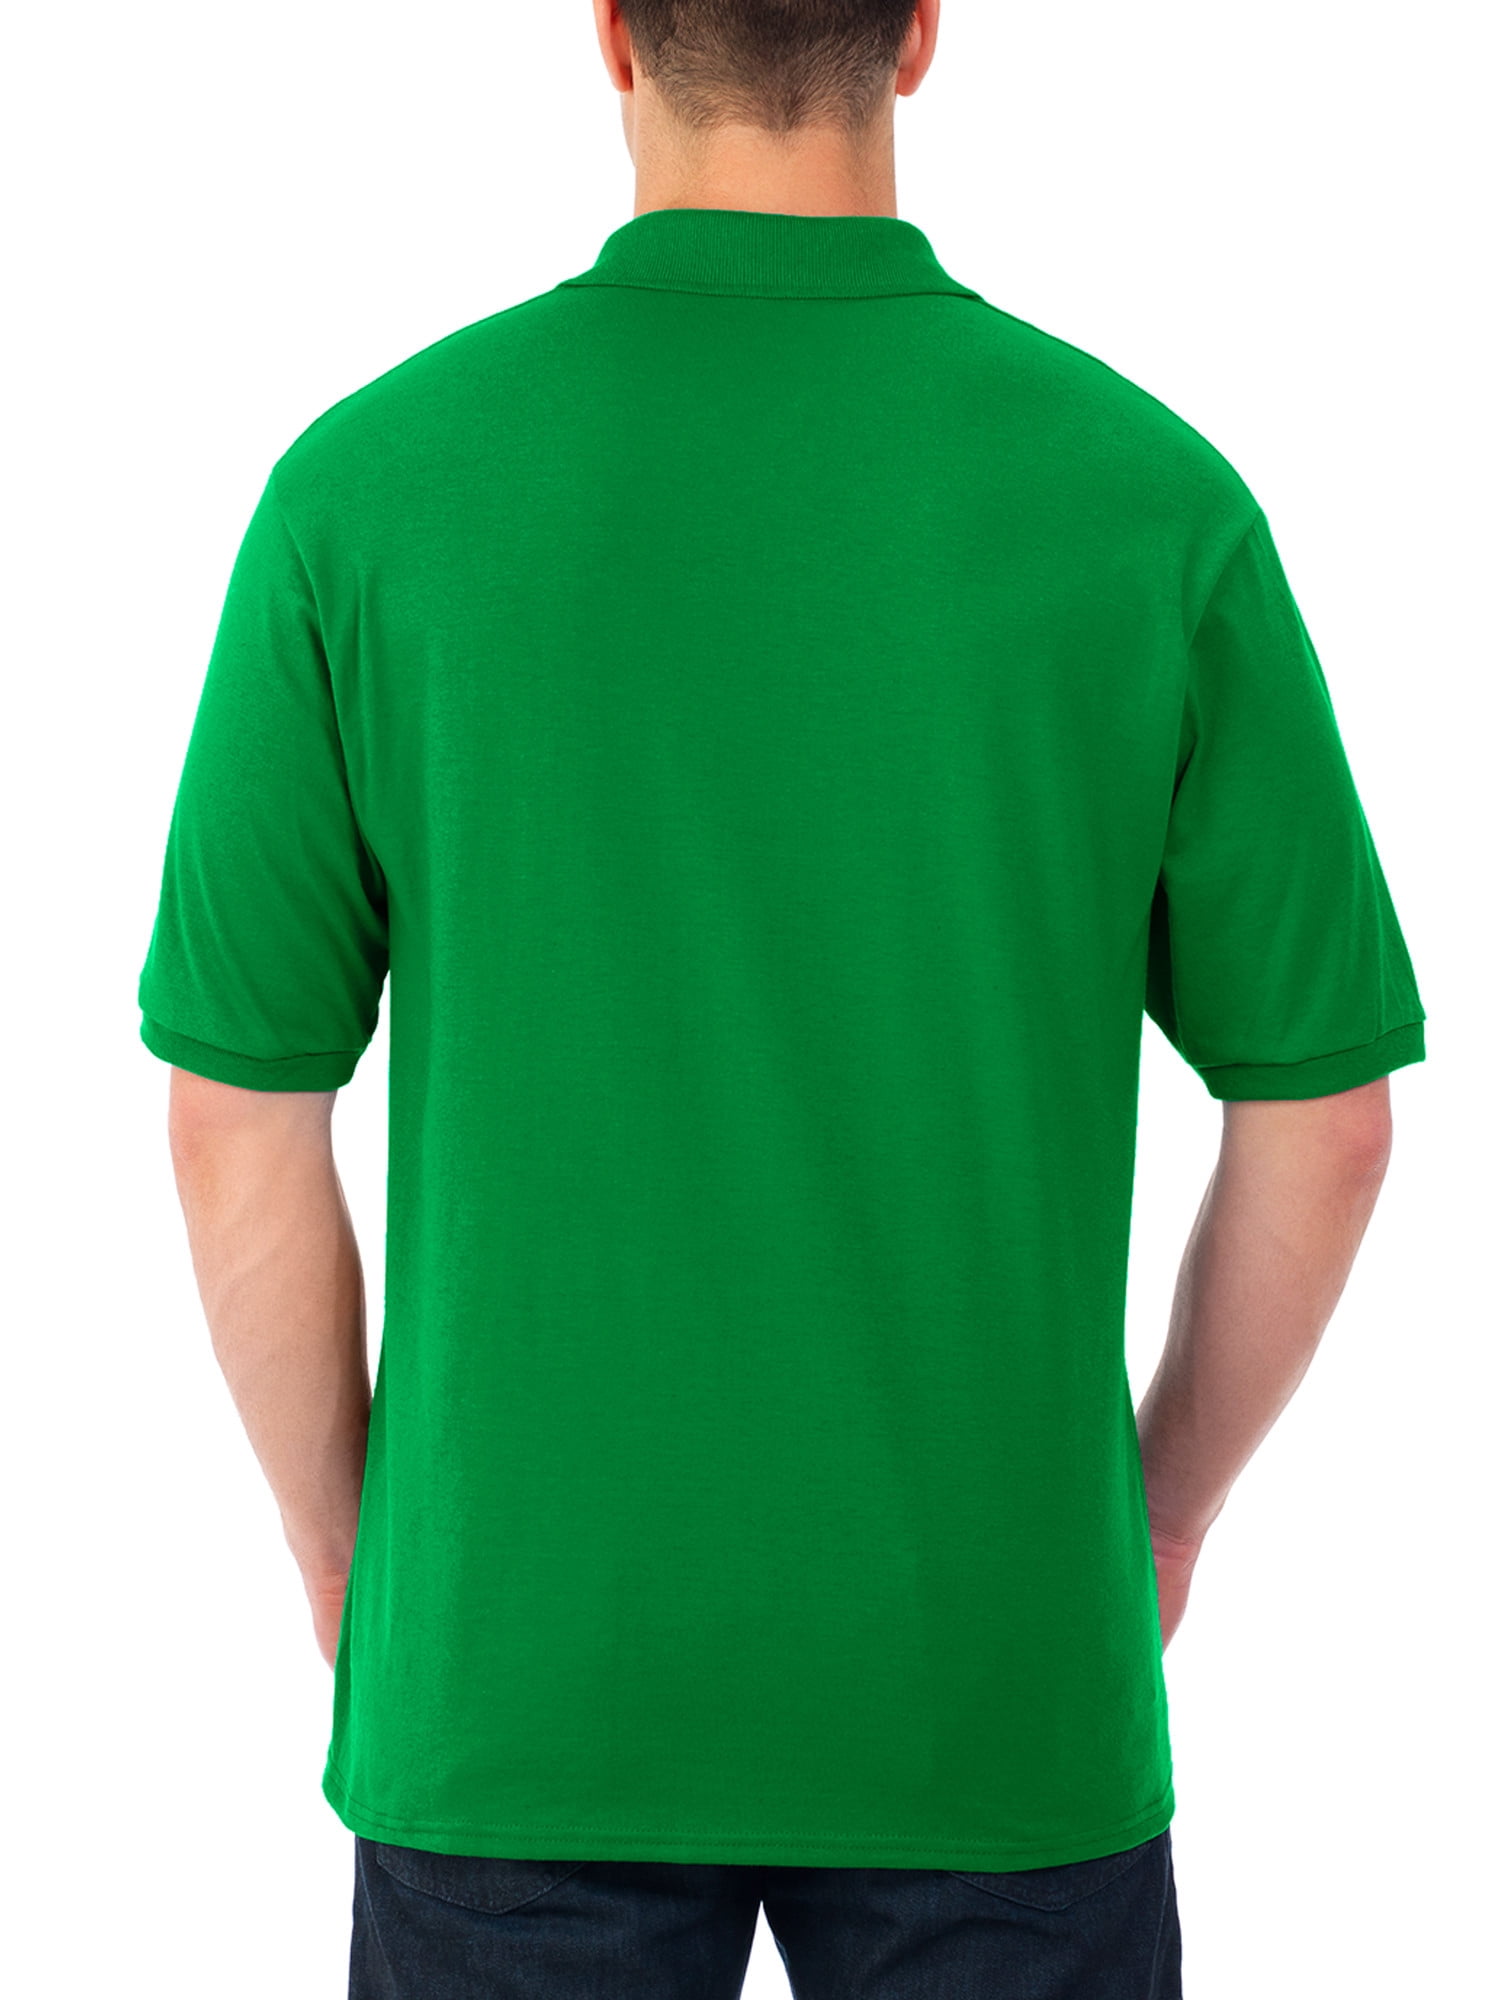 Jerzees Boys Spot Shield Long Sleeve Polo Sport Shirt